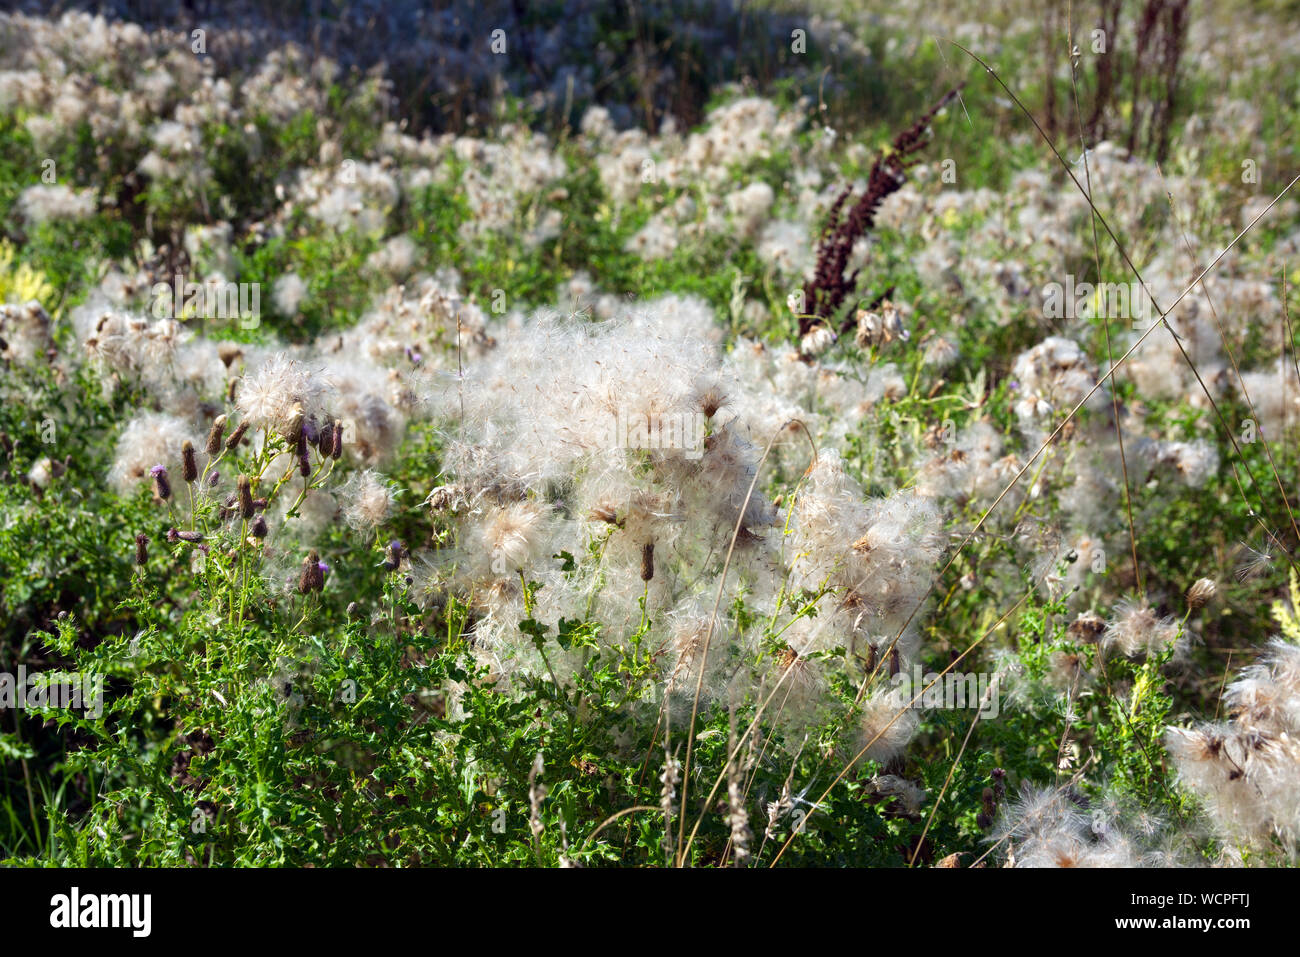 dandelion seed heads on plants Stock Photo